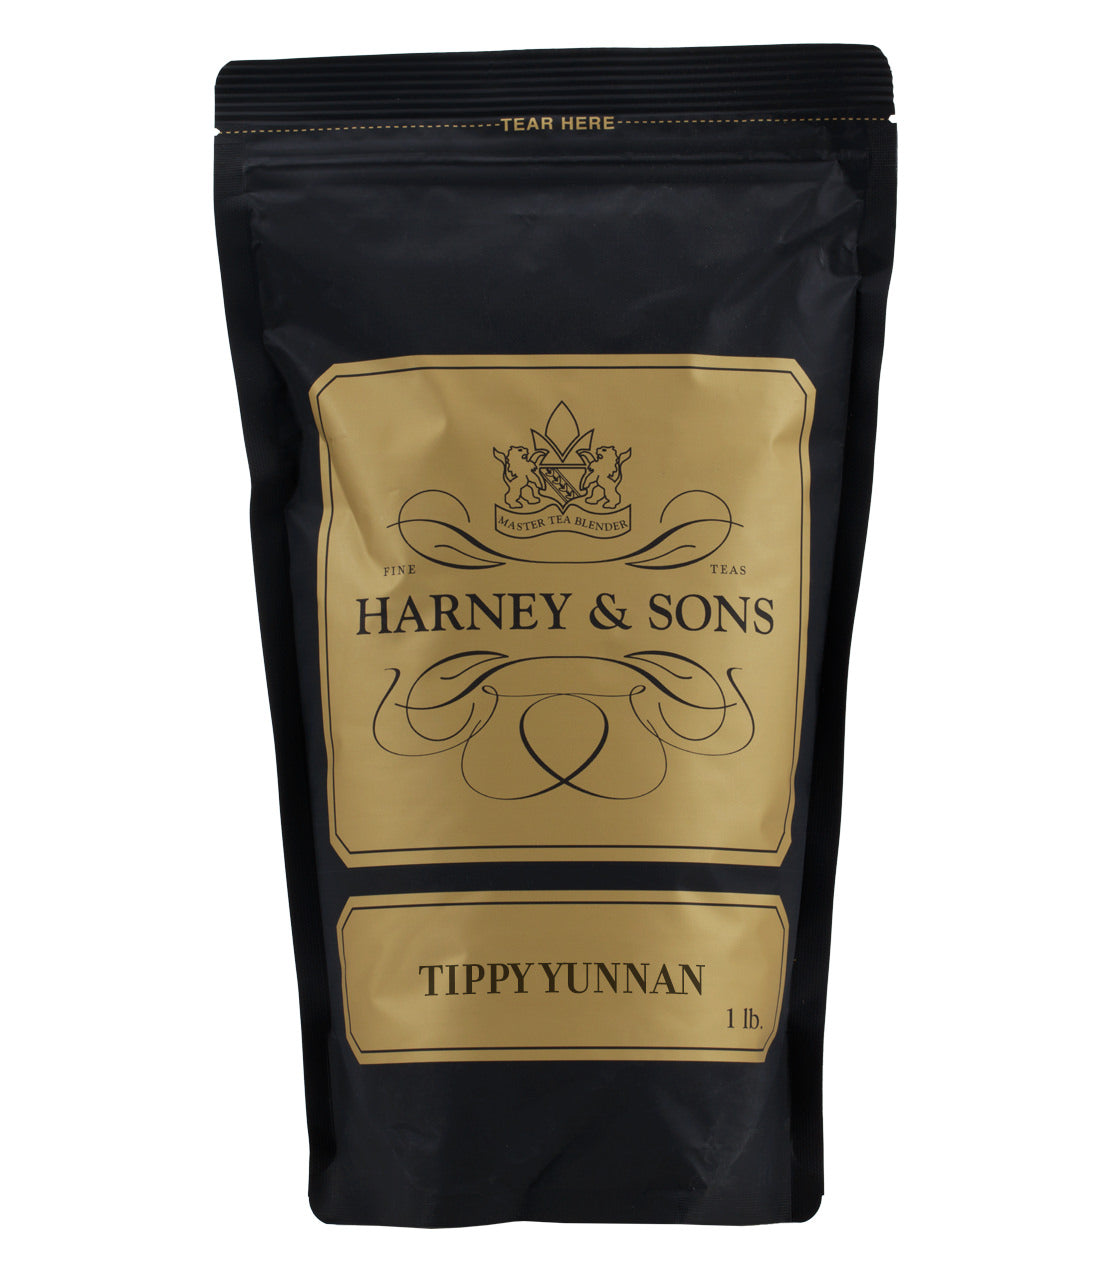 Tippy Yunnan - Loose 1 lb. Bag - Harney & Sons Fine Teas